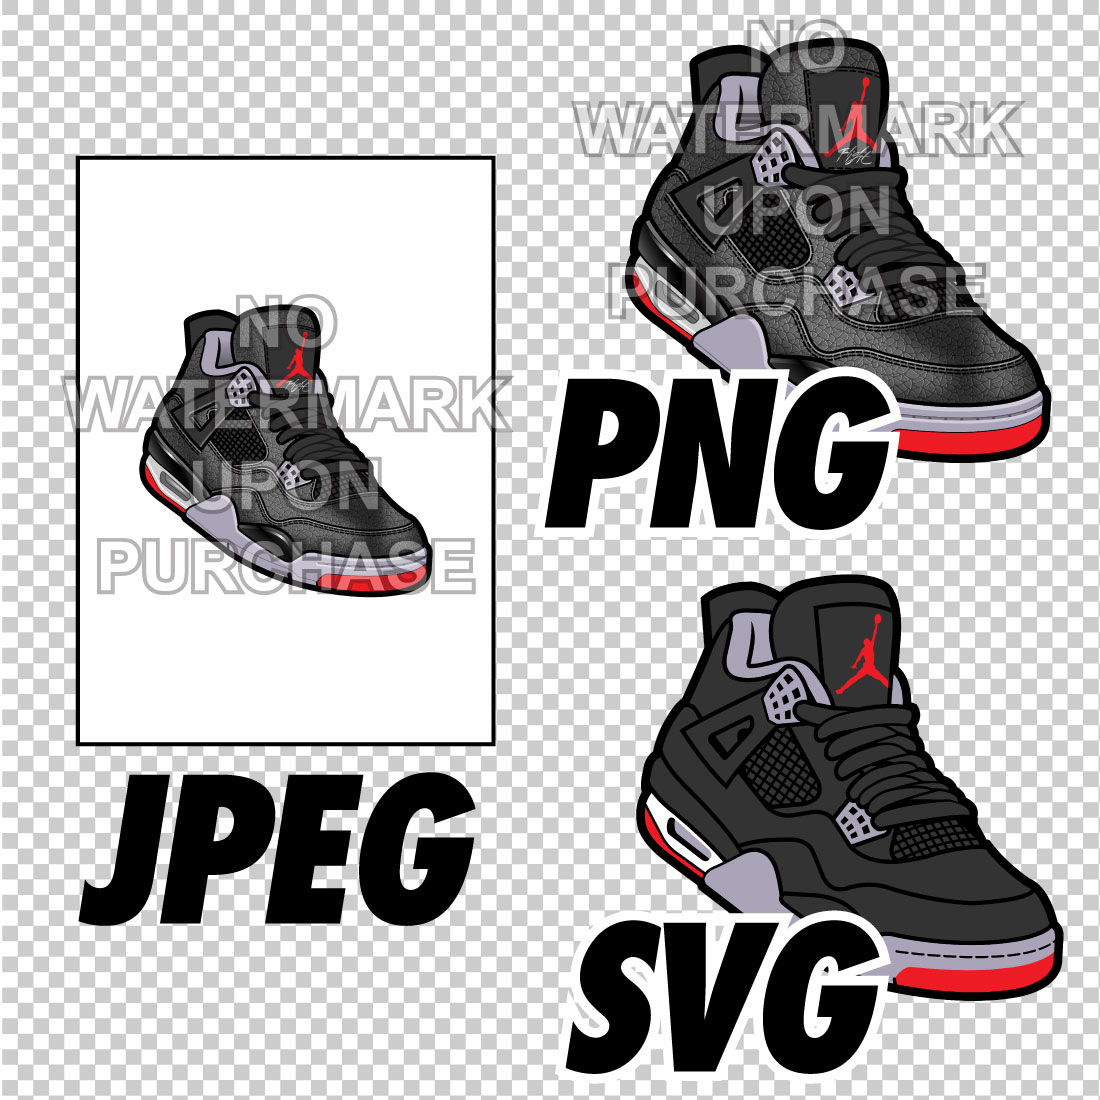 Air Jordan 4 Bred Reimagined JPEG PNG SVG Sneaker Art right & left shoe bundle preview image.